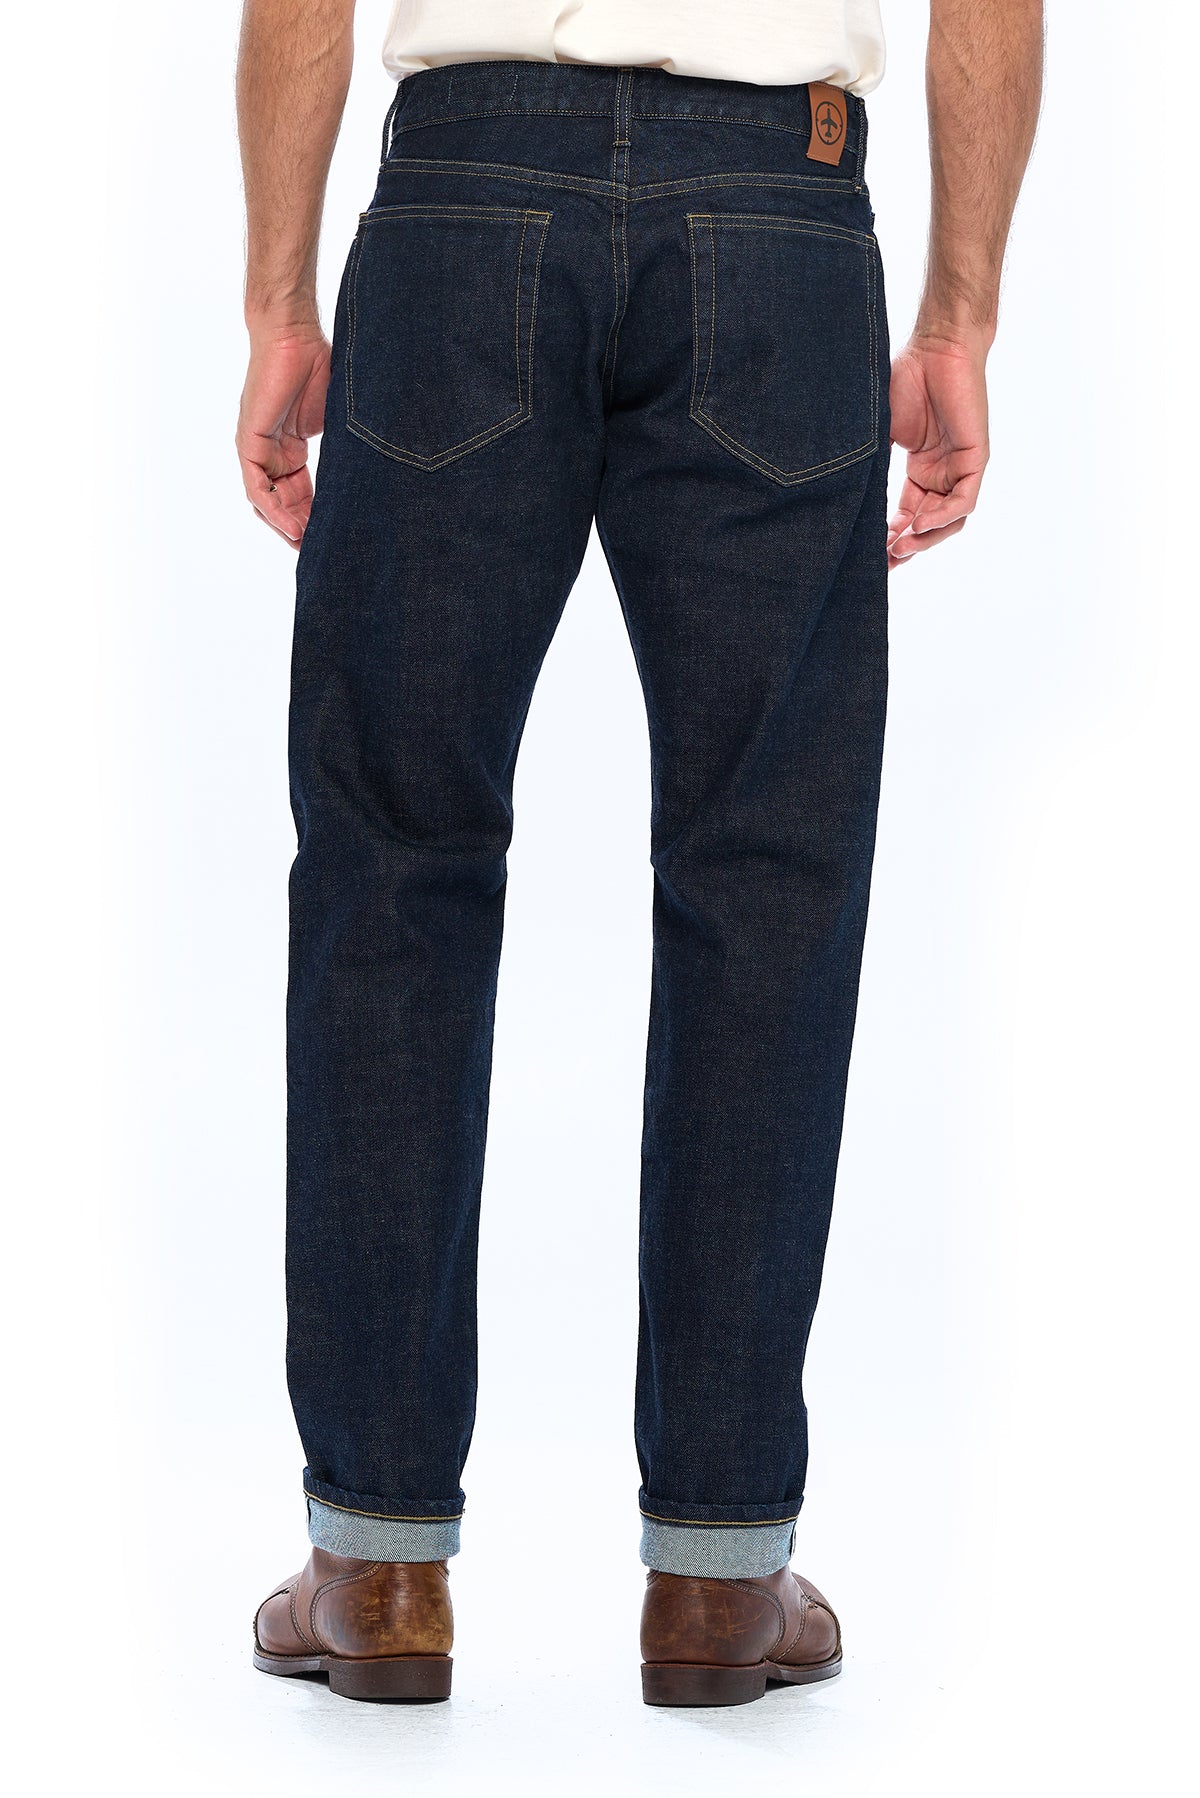 Aviator The Best Travel Jeans for Men | Selvedge Dark Indigo | Made in The USA 40